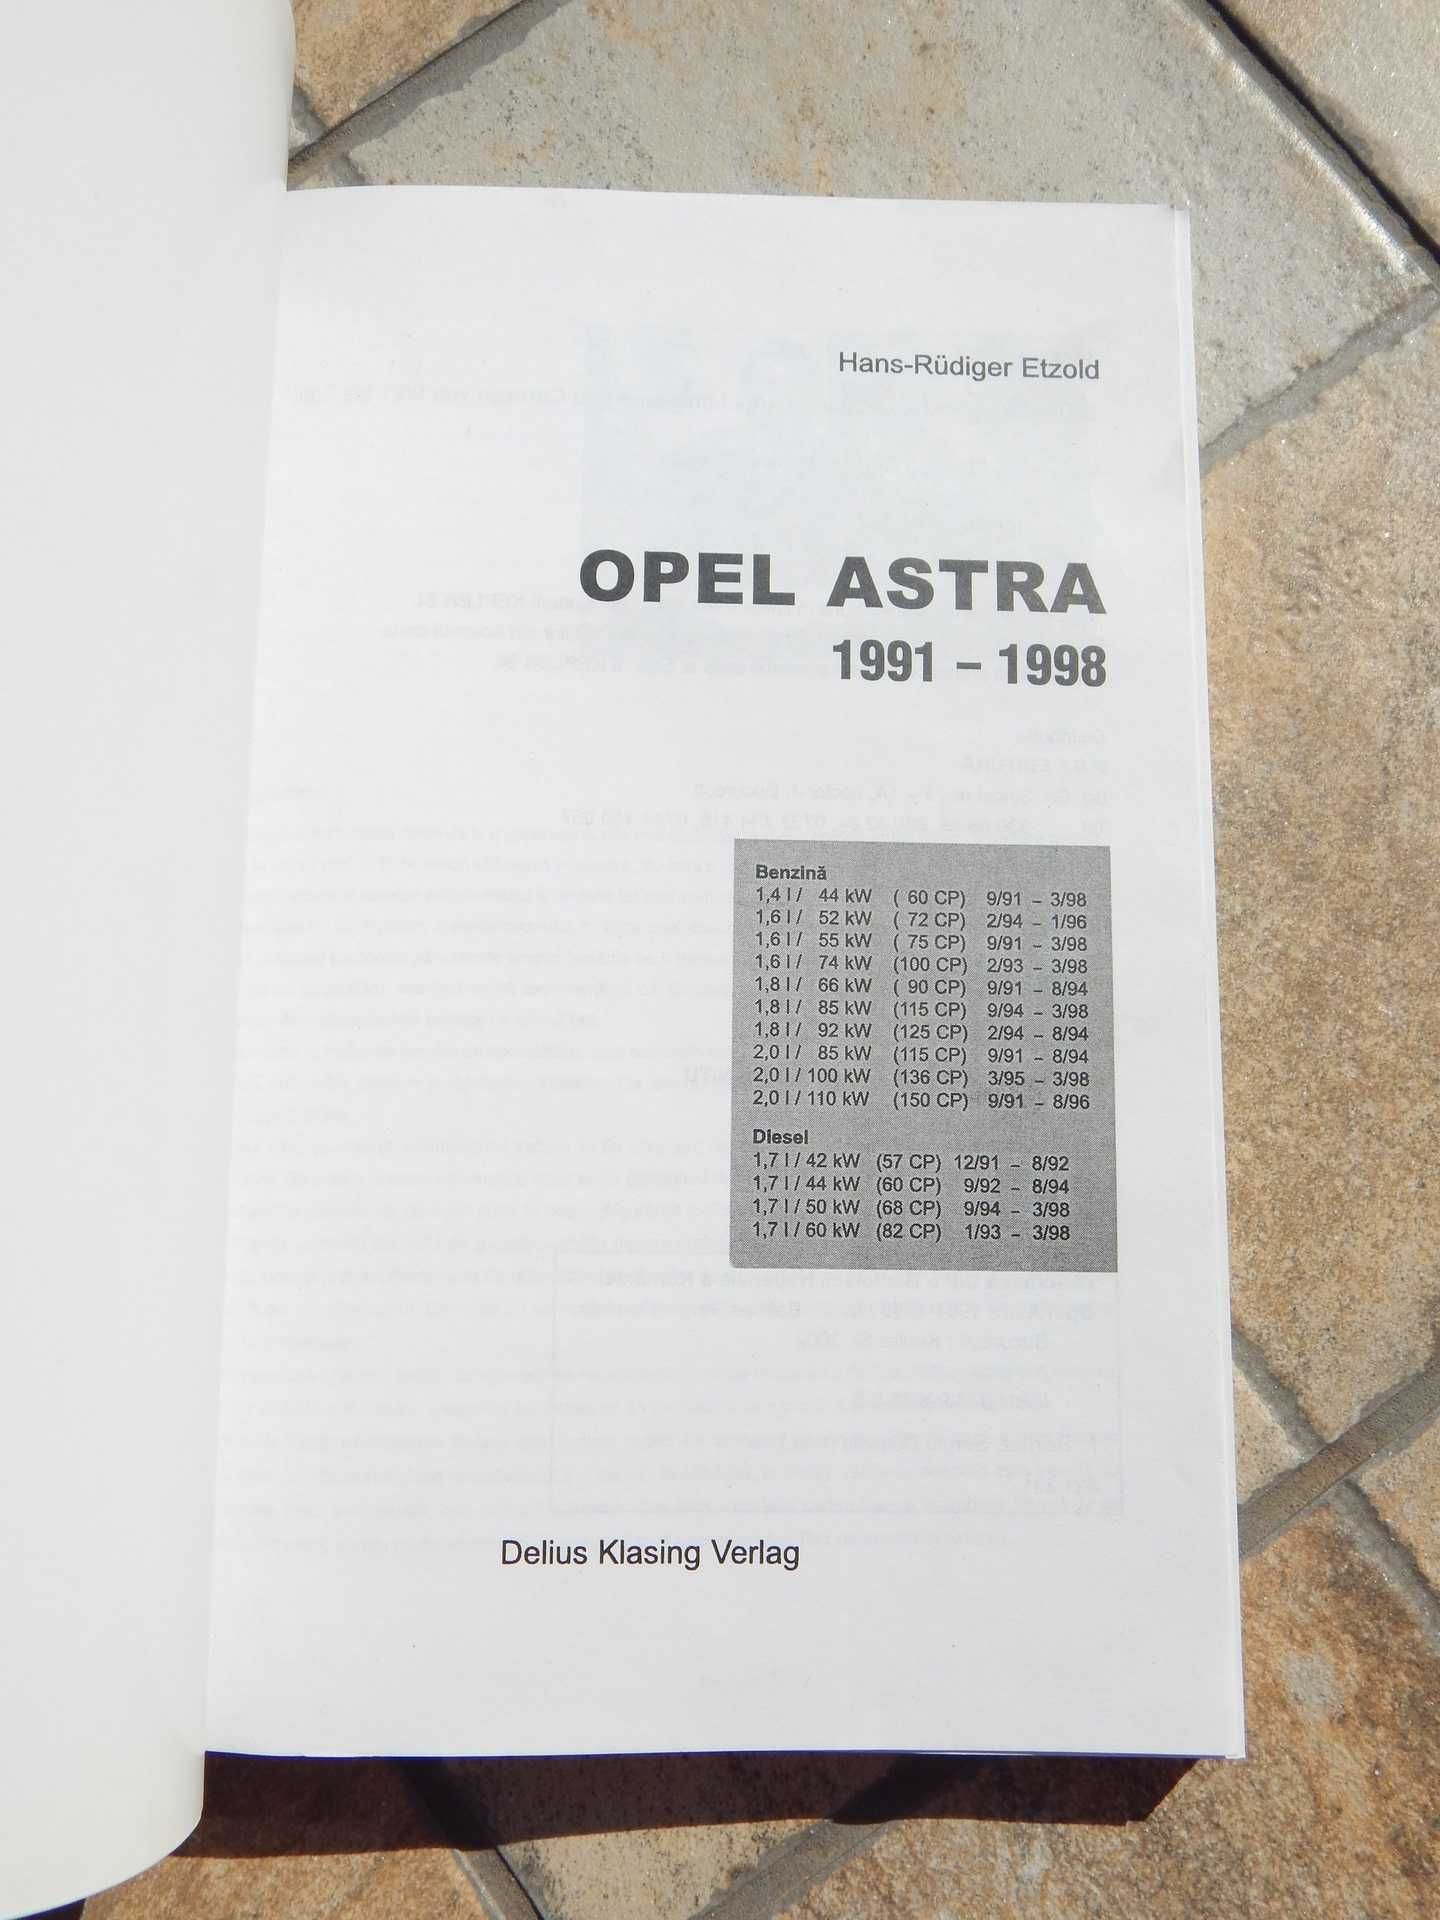 Manual tehnic complet Opel Astra F 1991-1998 H.R. Etzold 2002 romana